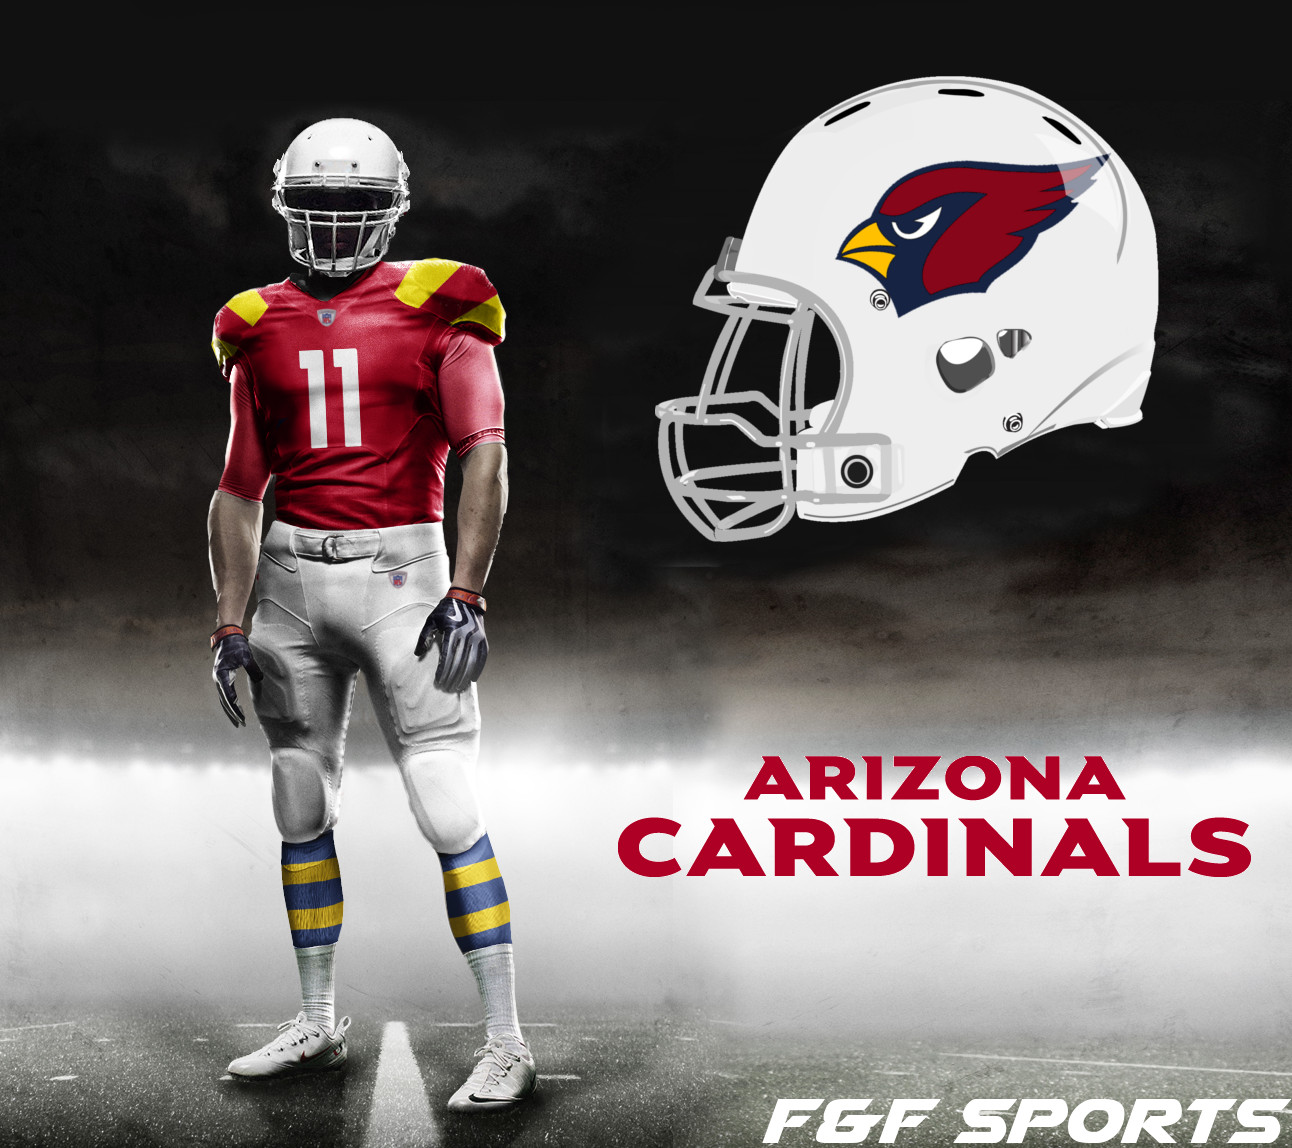 arizona cardinals new uniforms